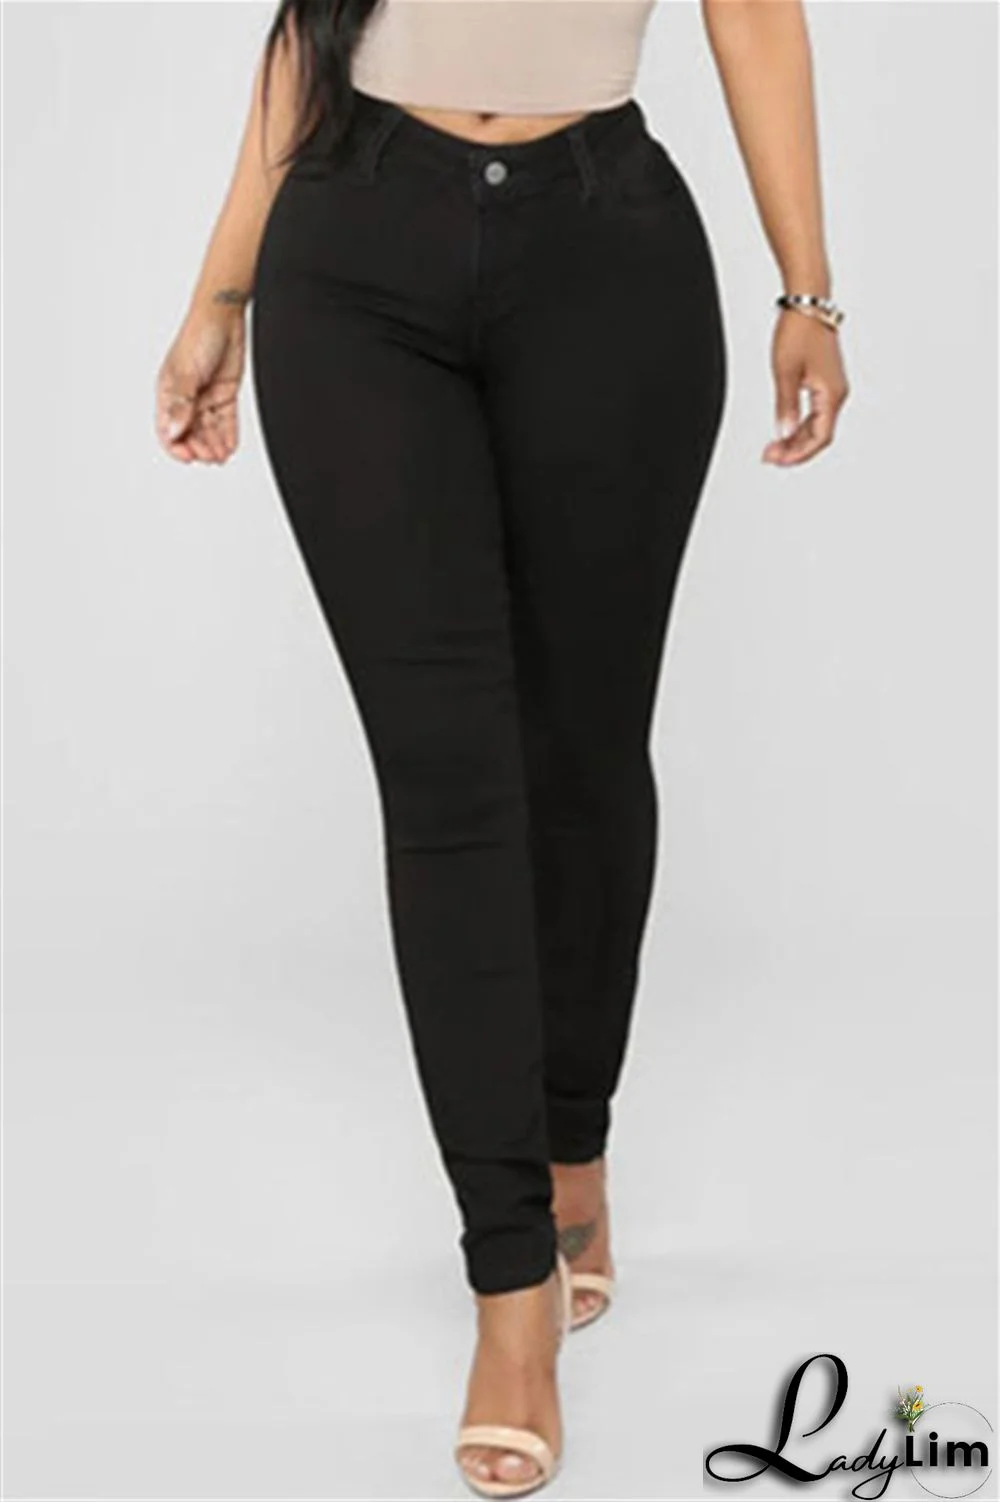 Black Fashion Casual Solid Basic High Waist Skinny Denim Jeans